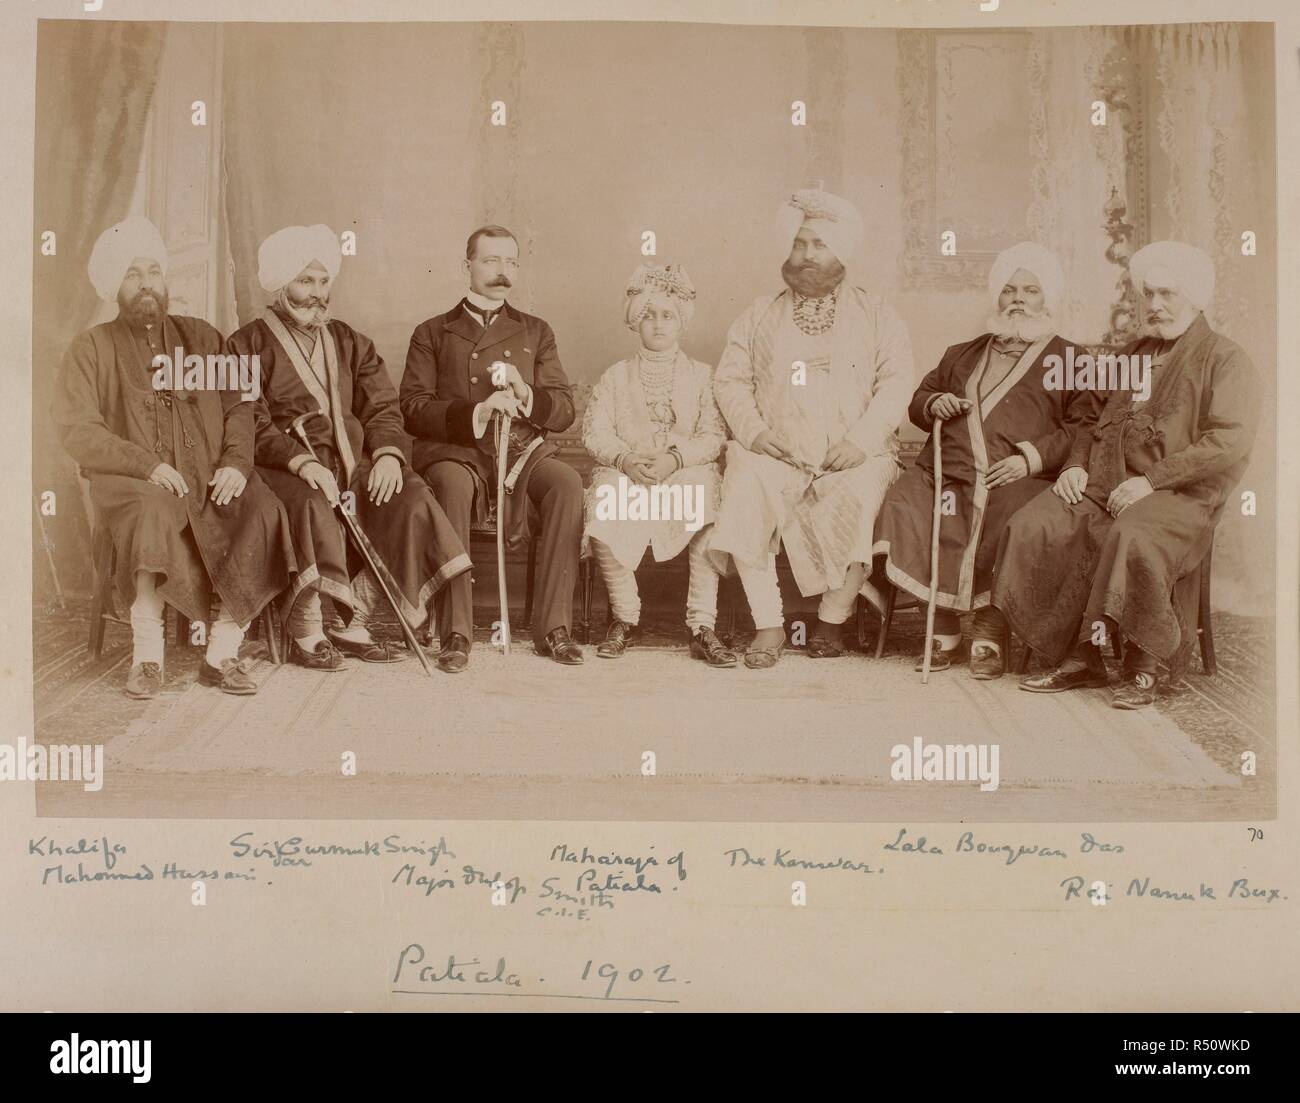 Photograph of the Maharaja of Patiala with J.R. Dunlop Smith and state officials, Patiala, 1902. Sitters are named, from left: 'Khalifa Mahomed Hussain; Sirdar Gurmuk Singh; Major Dunlop Smith, CIE; Maharaja of Patiala; The Kanwar; Lala Bougwan Das; Rai Nanuk Bux'. Portrait of the Maharaja of Patiala with J.R. Dunlop Smith and state officials, Patiala, 1902. India; Patiala; Punjab; Punjab (India); Nov 1902. Source: Photo 355/2/(70). Stock Photo